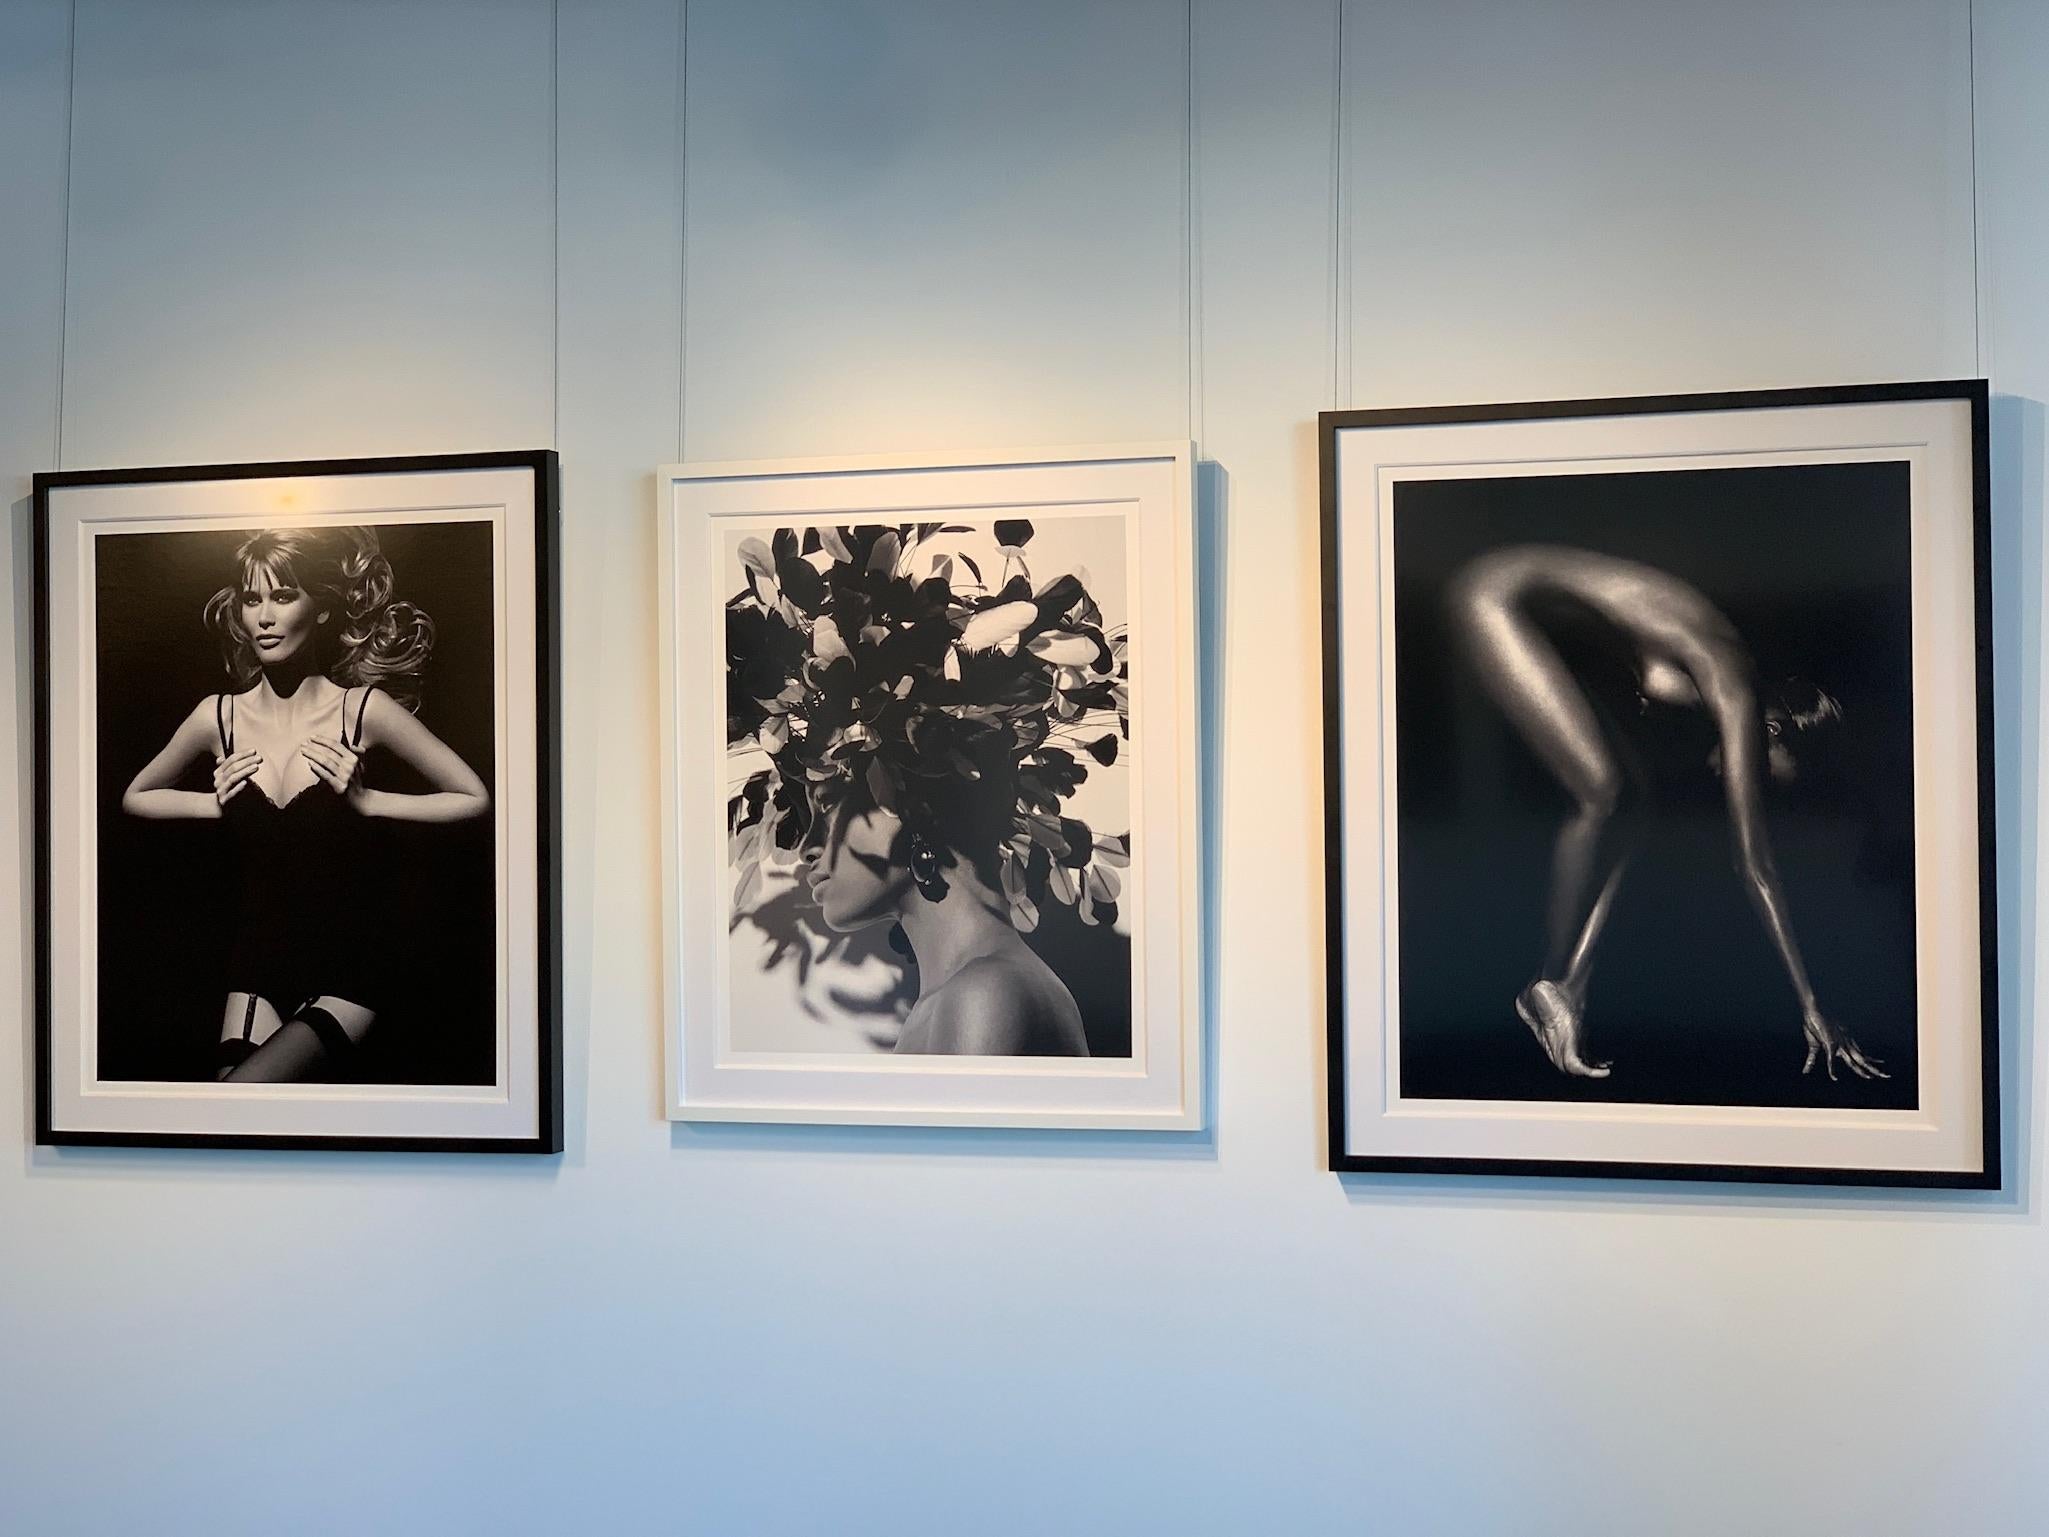 „E_046), CLAUDIA SCHIFFER, Paris '97 (E_046) (Schwarz), Black and White Photograph, von Bruno Bisang